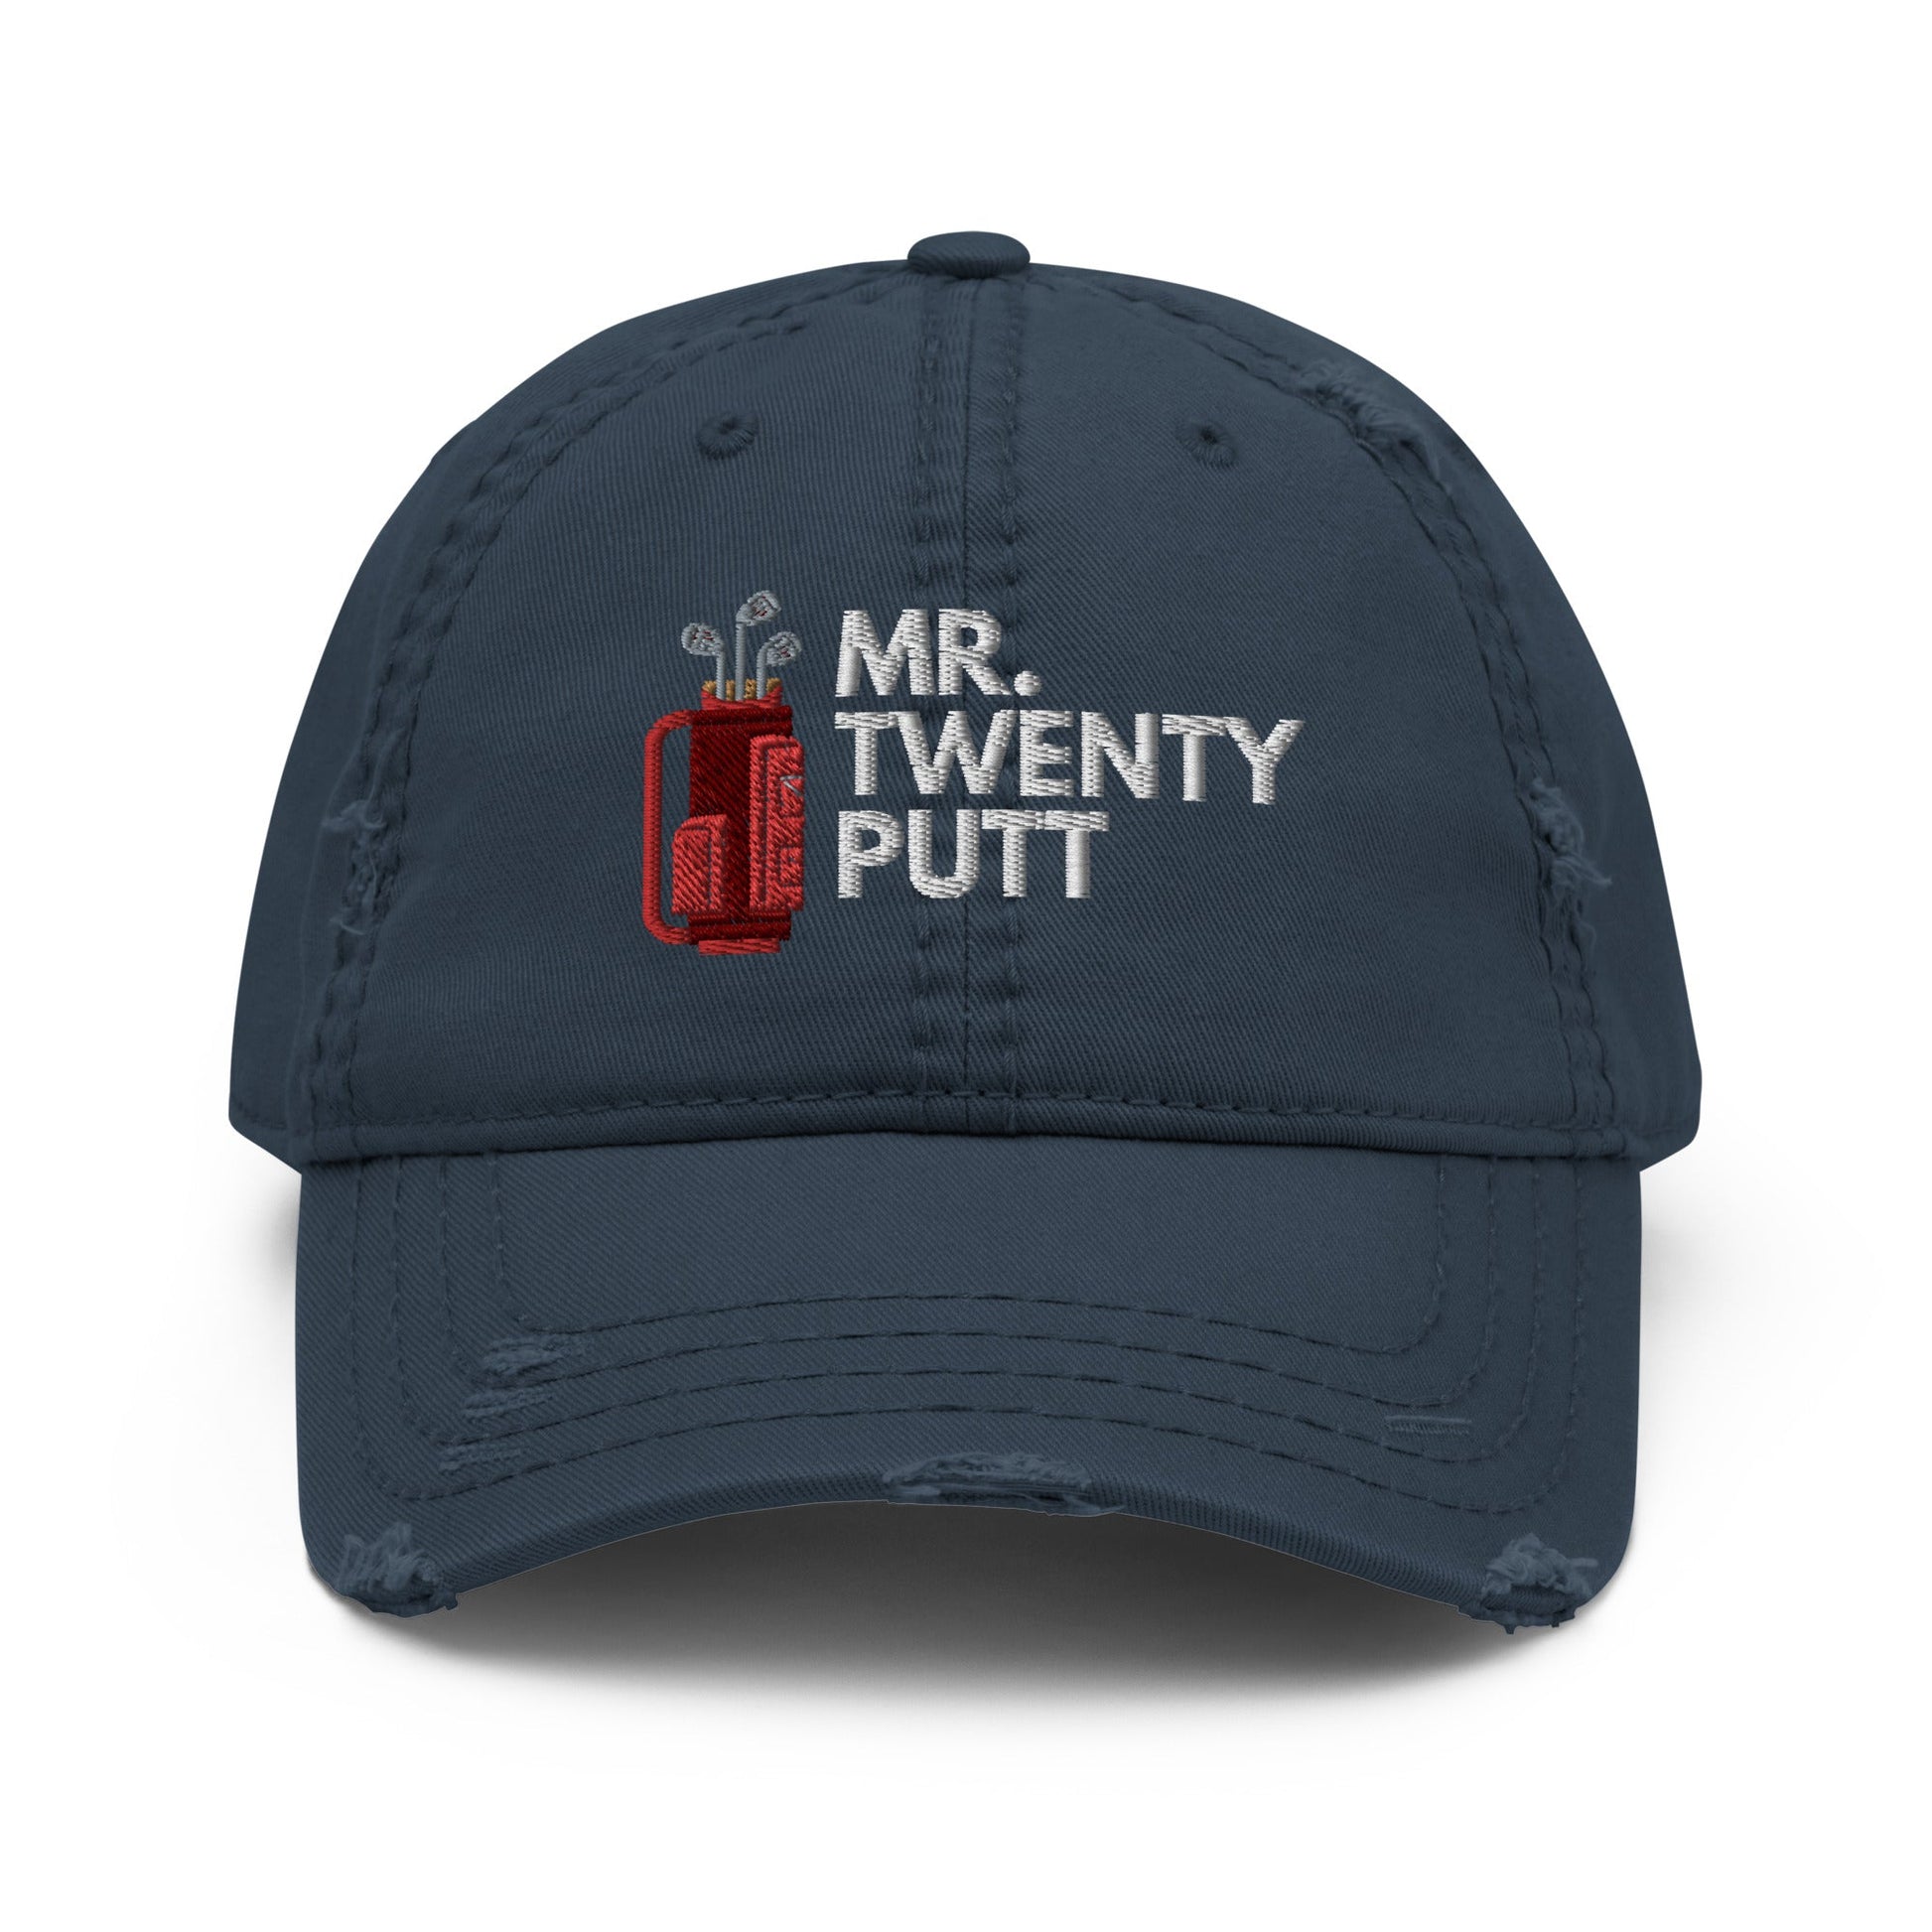 Funny Golfer Gifts  Distressed Cap Navy Mr. Twenty Putt Distressed Hat